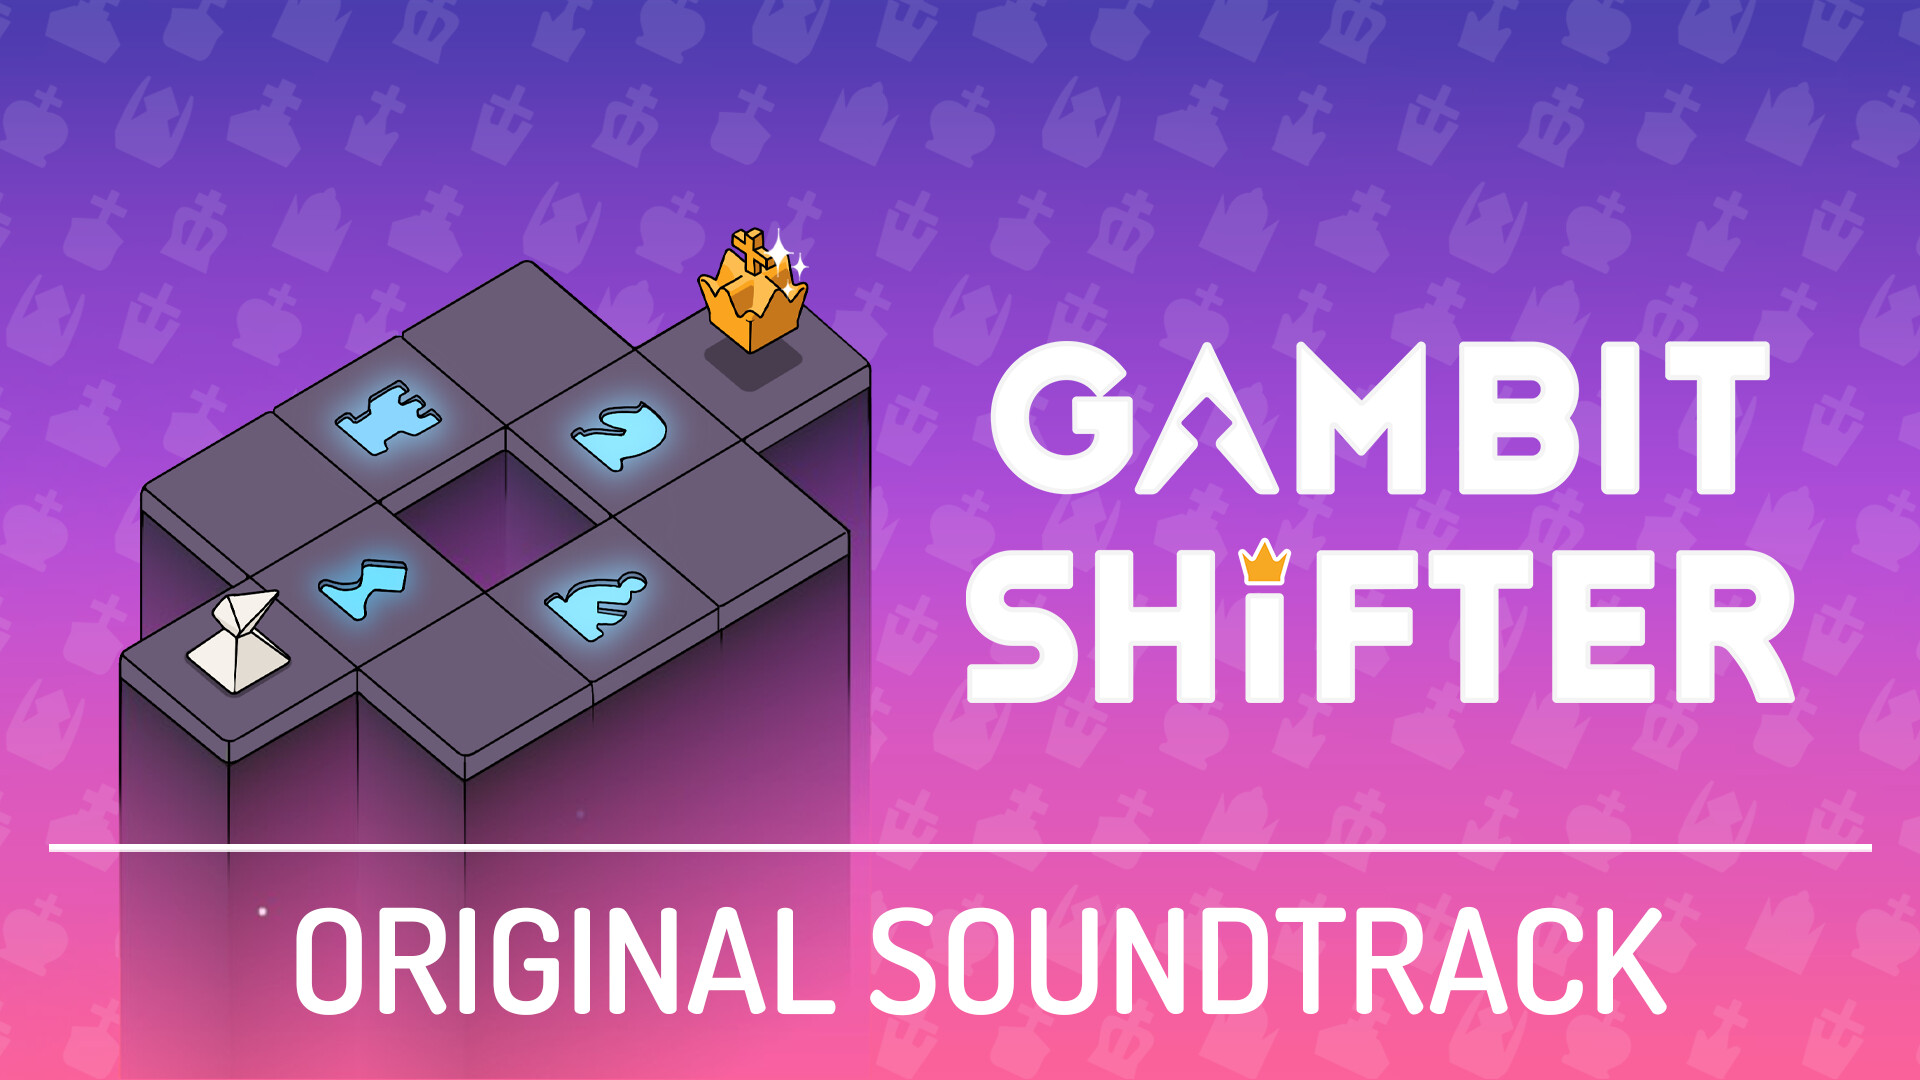 Gambit Shifter - Soundtrack Featured Screenshot #1